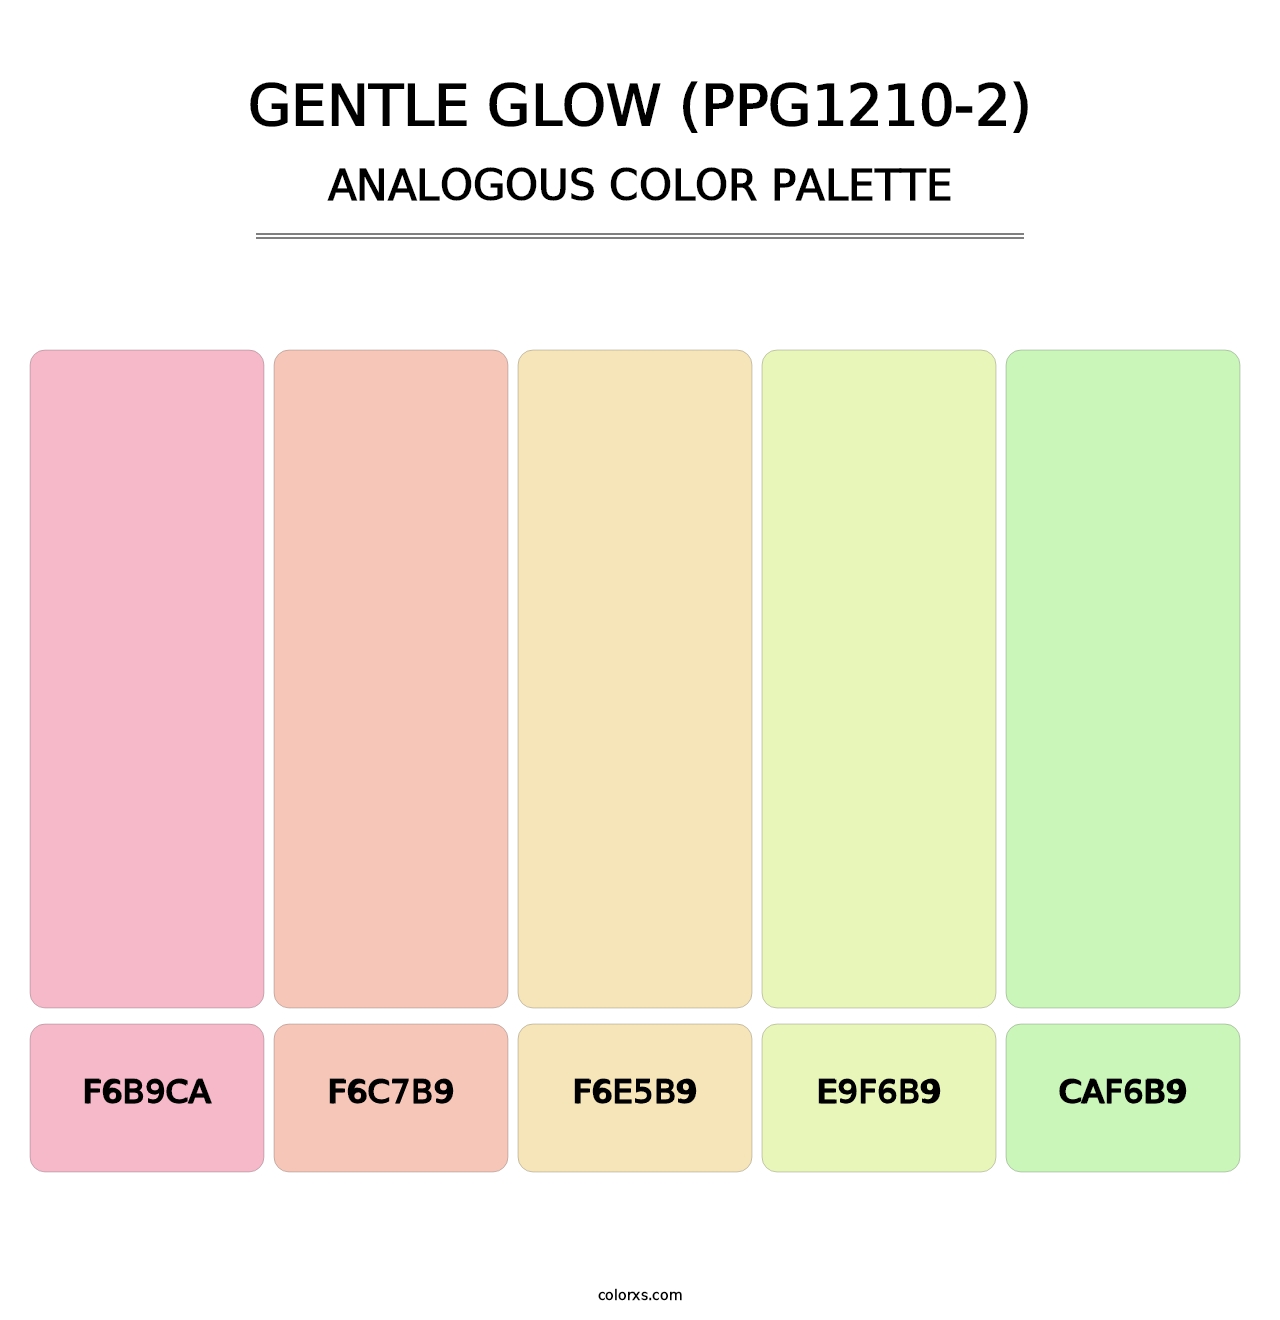 Gentle Glow (PPG1210-2) - Analogous Color Palette